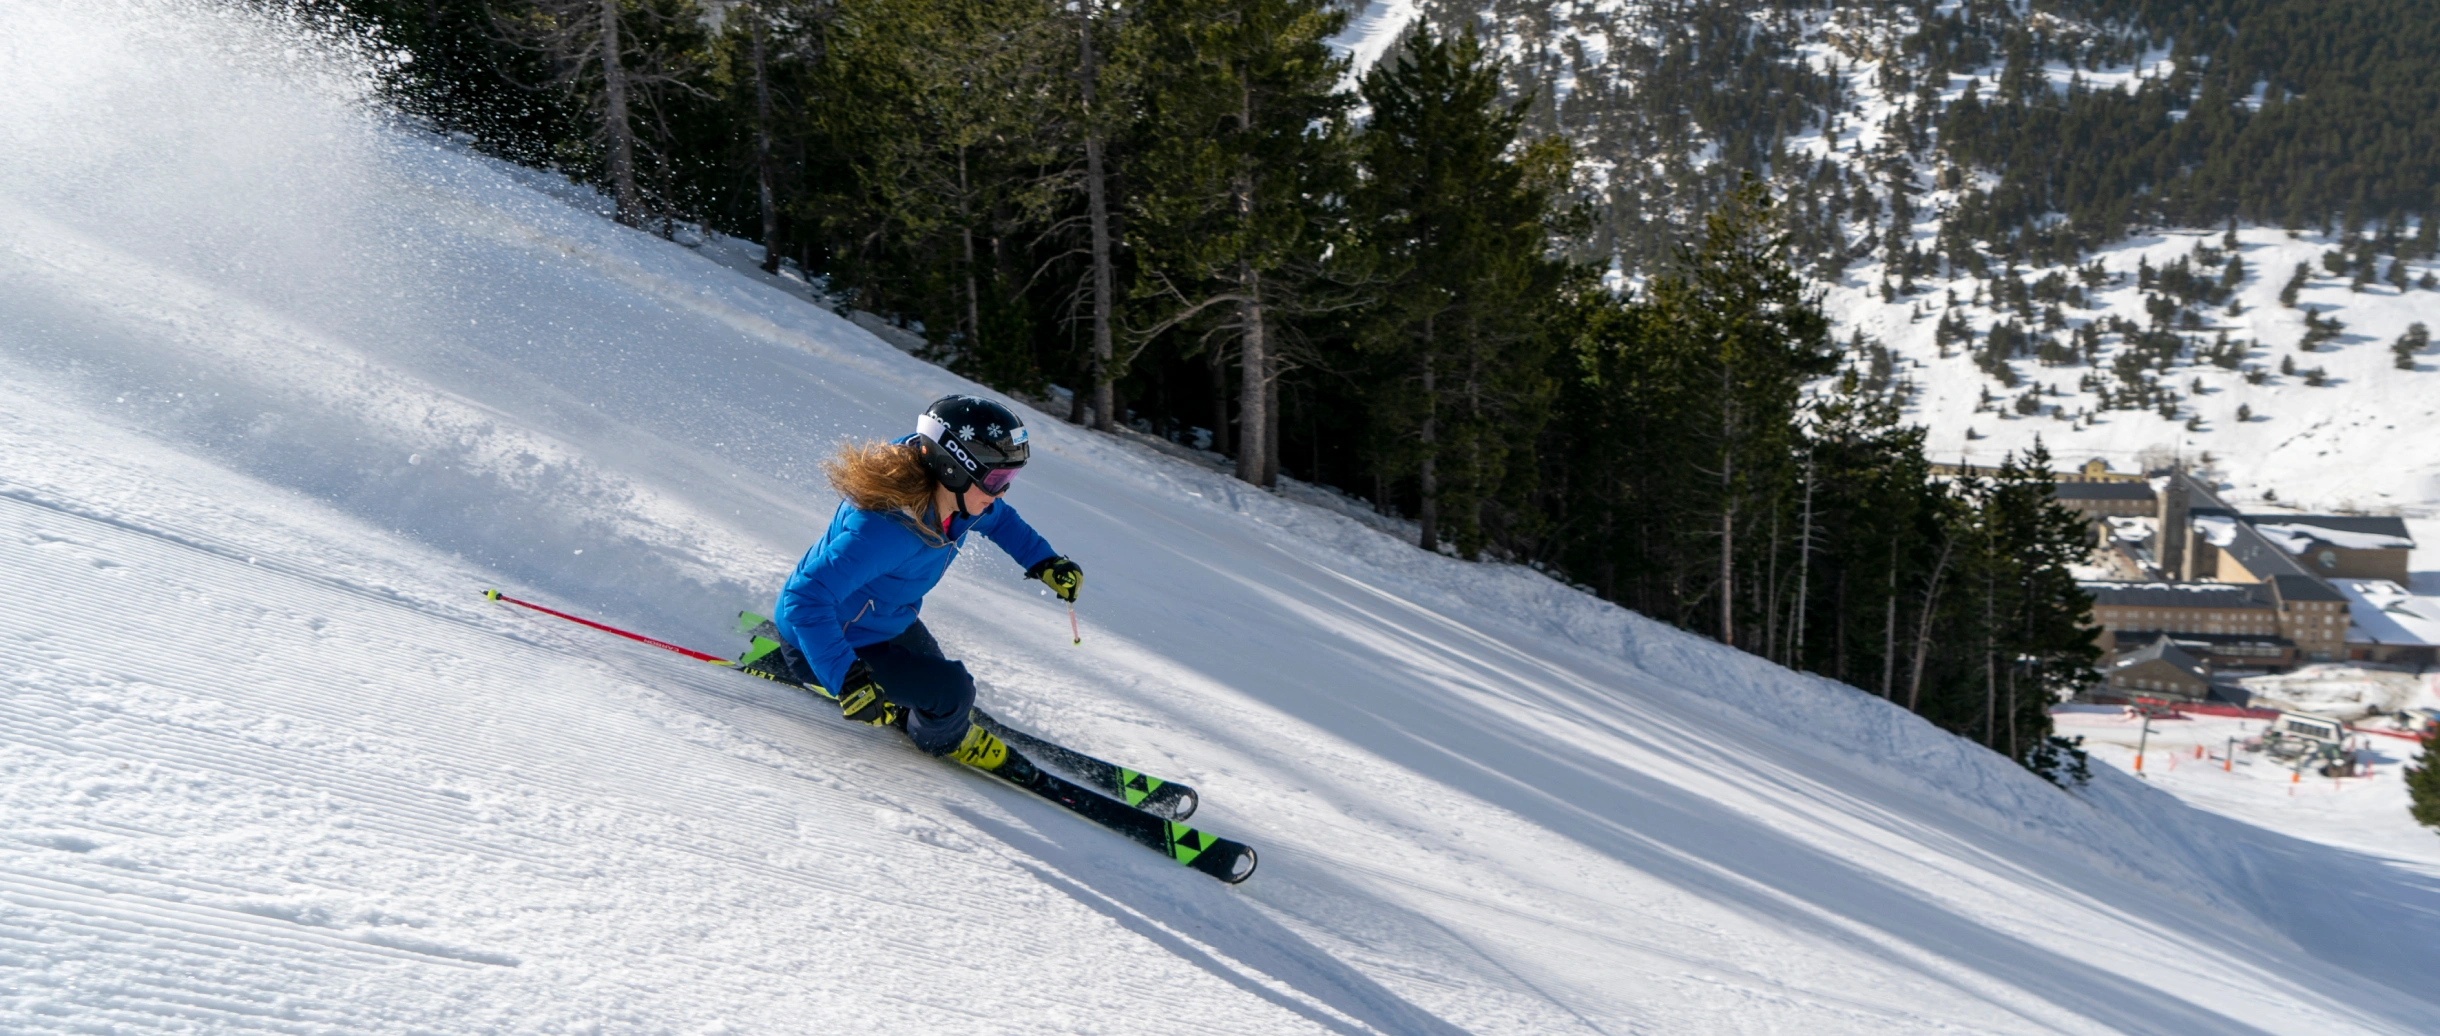 Journée au ski dans la vallée de Núria slide 0